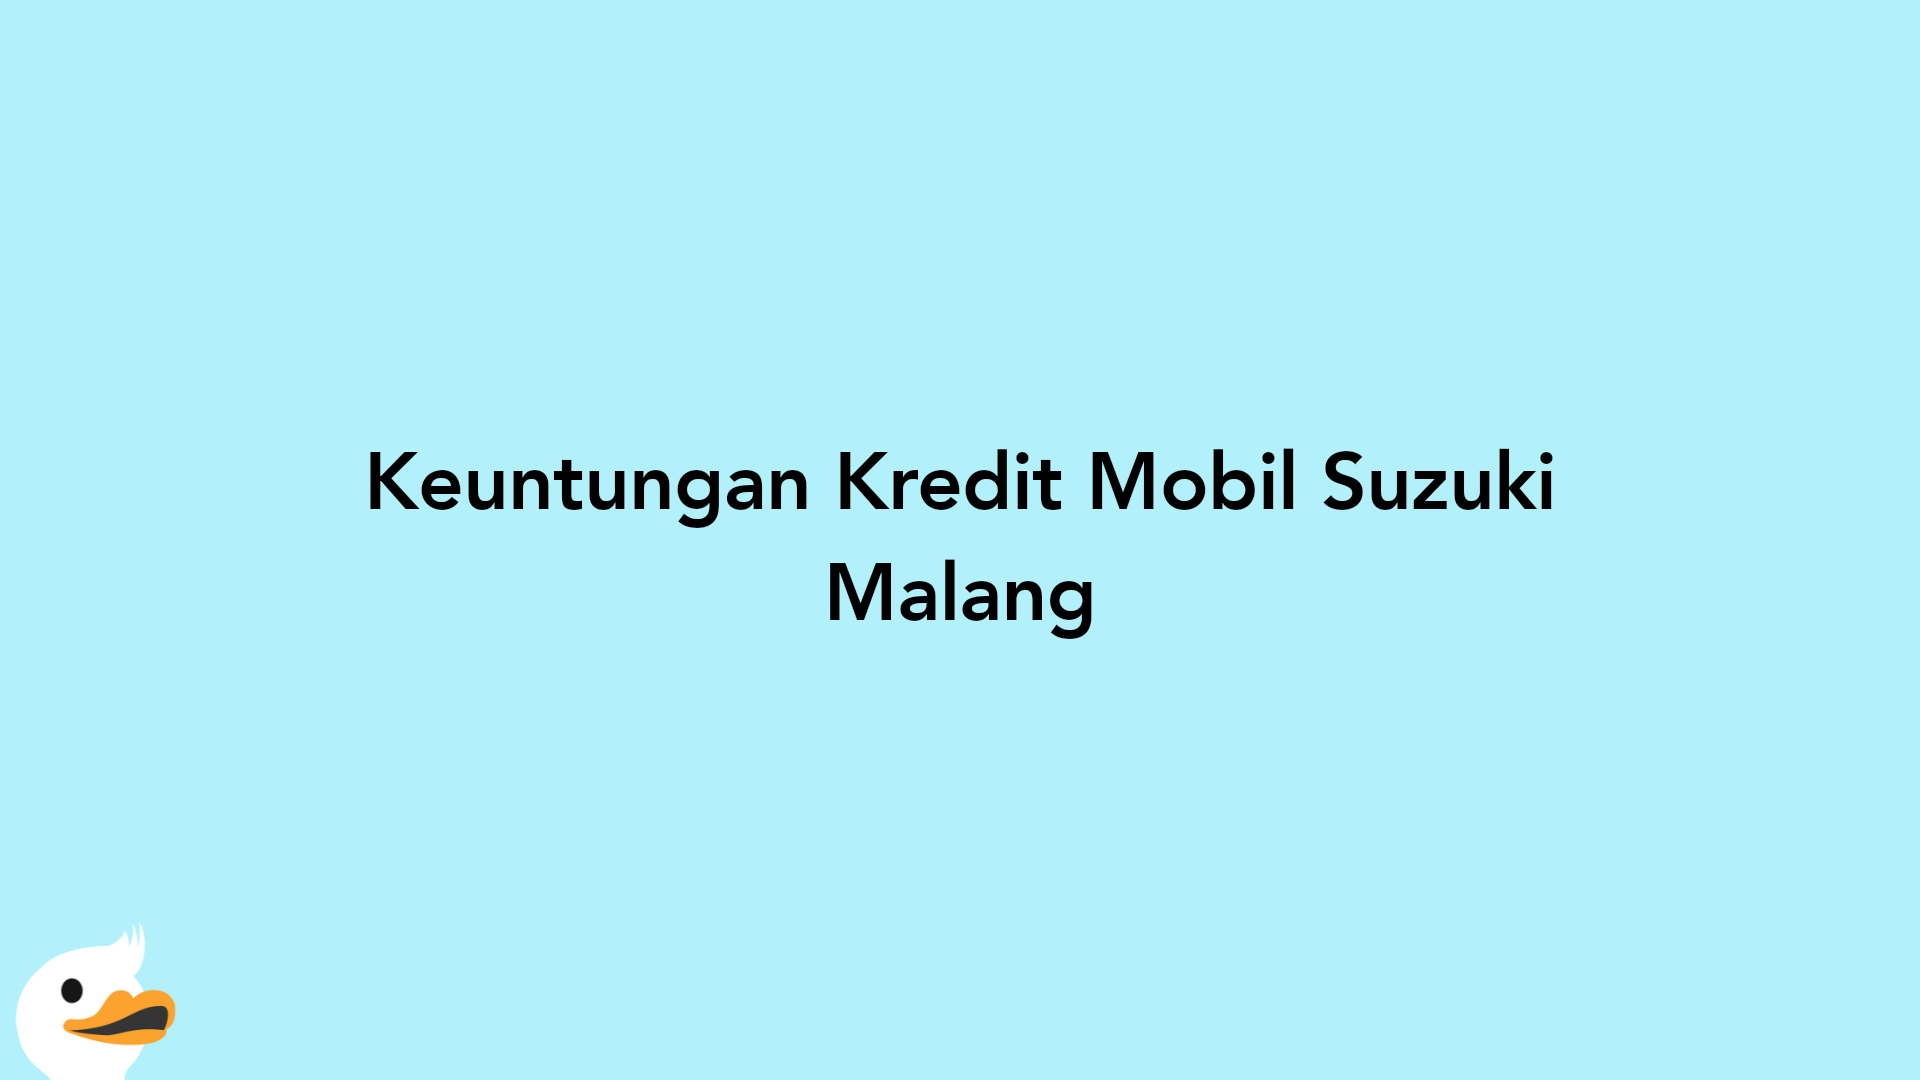 Keuntungan Kredit Mobil Suzuki Malang